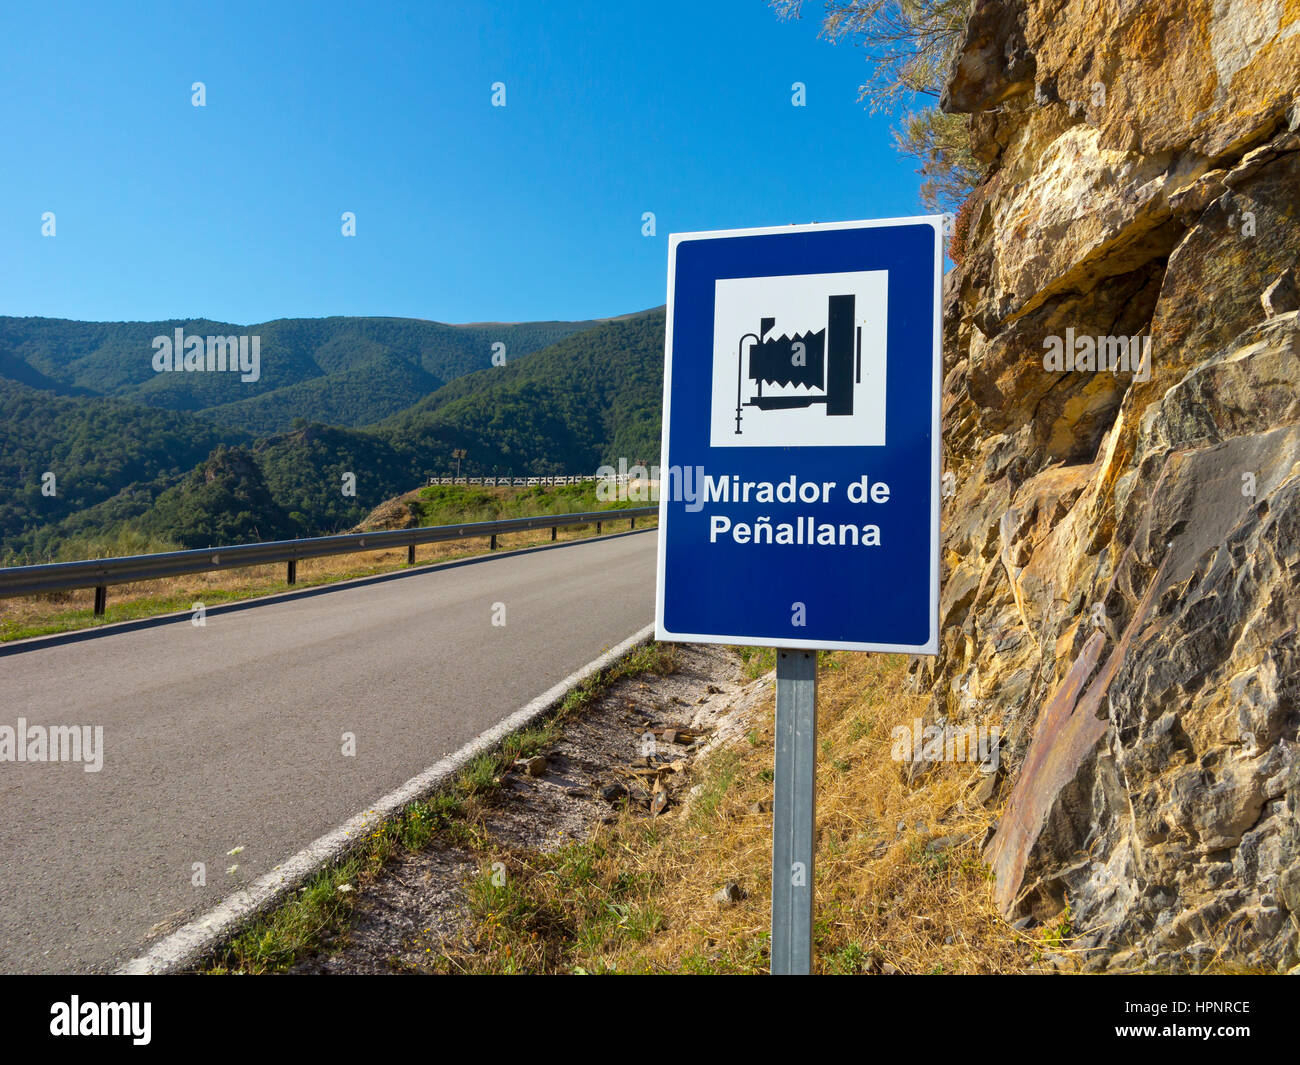 Strada di Montagna e firmare a Mirador de Penallana, Vega de Liebana, Parco Nazionale Picos de Europa, Cantabria, Spagna settentrionale Foto Stock